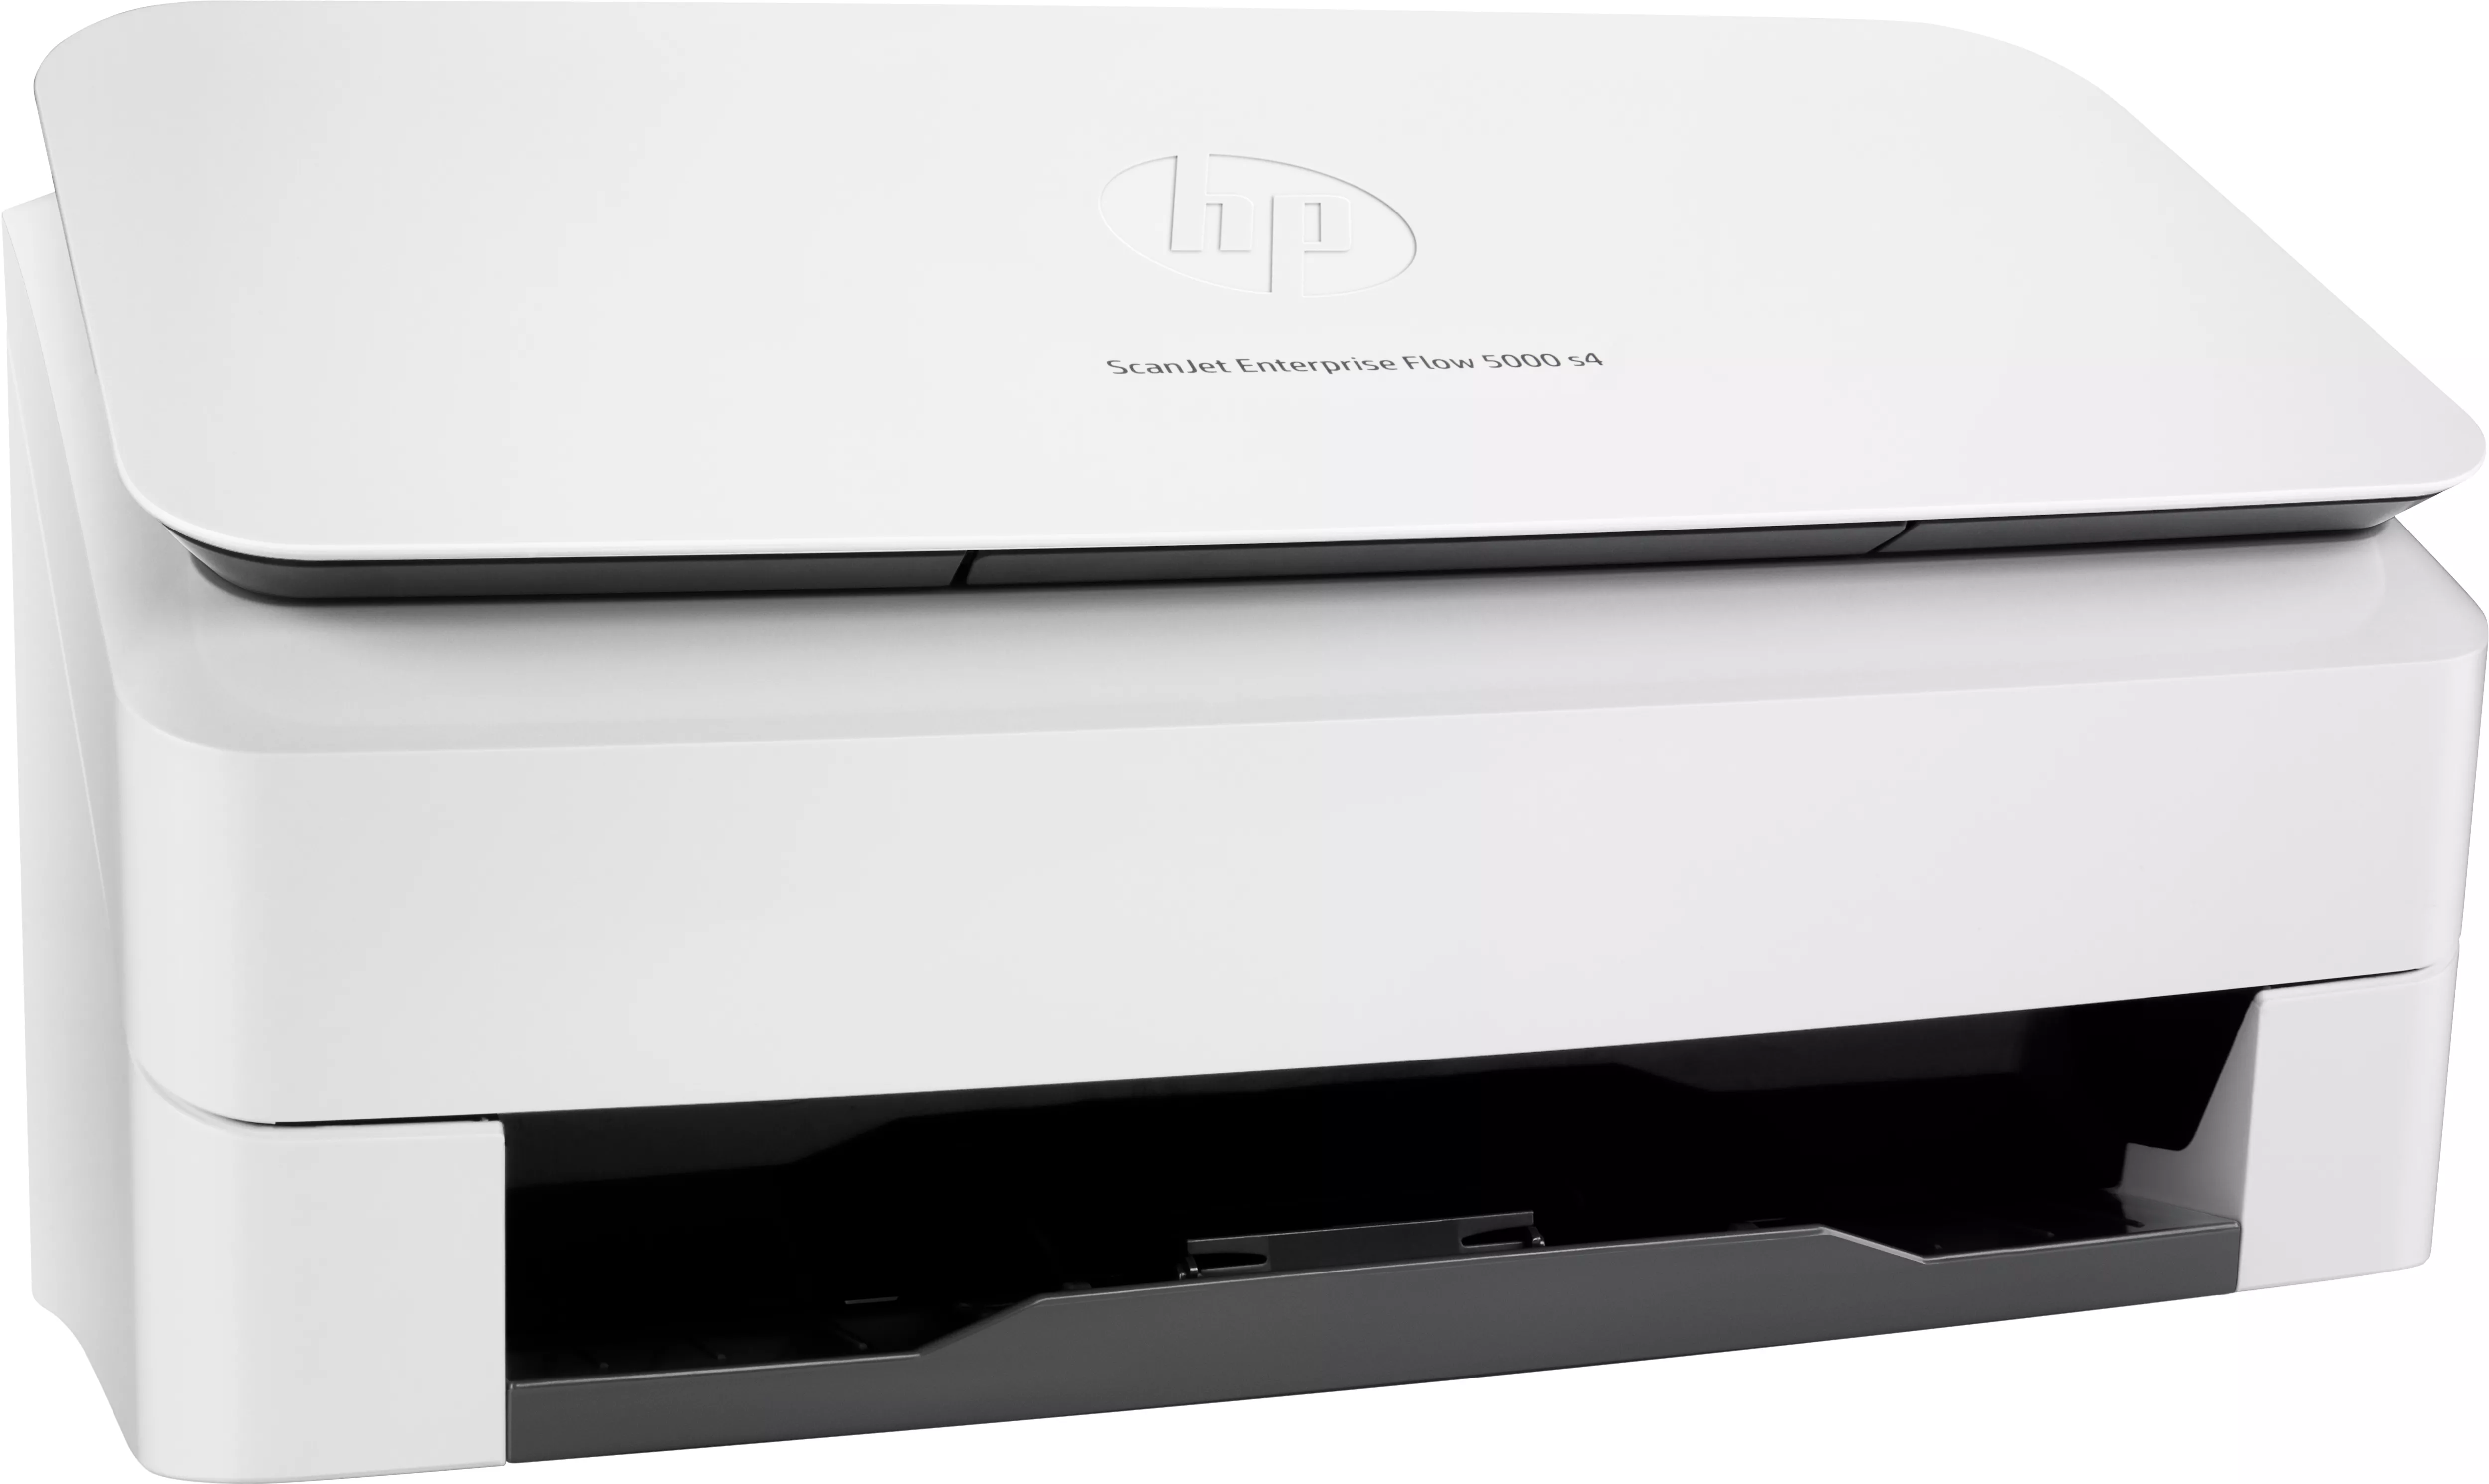 Vente HP ScanJet Enterprise Flow 5000 S4 Sheet-Feed Scanner HP au meilleur prix - visuel 4